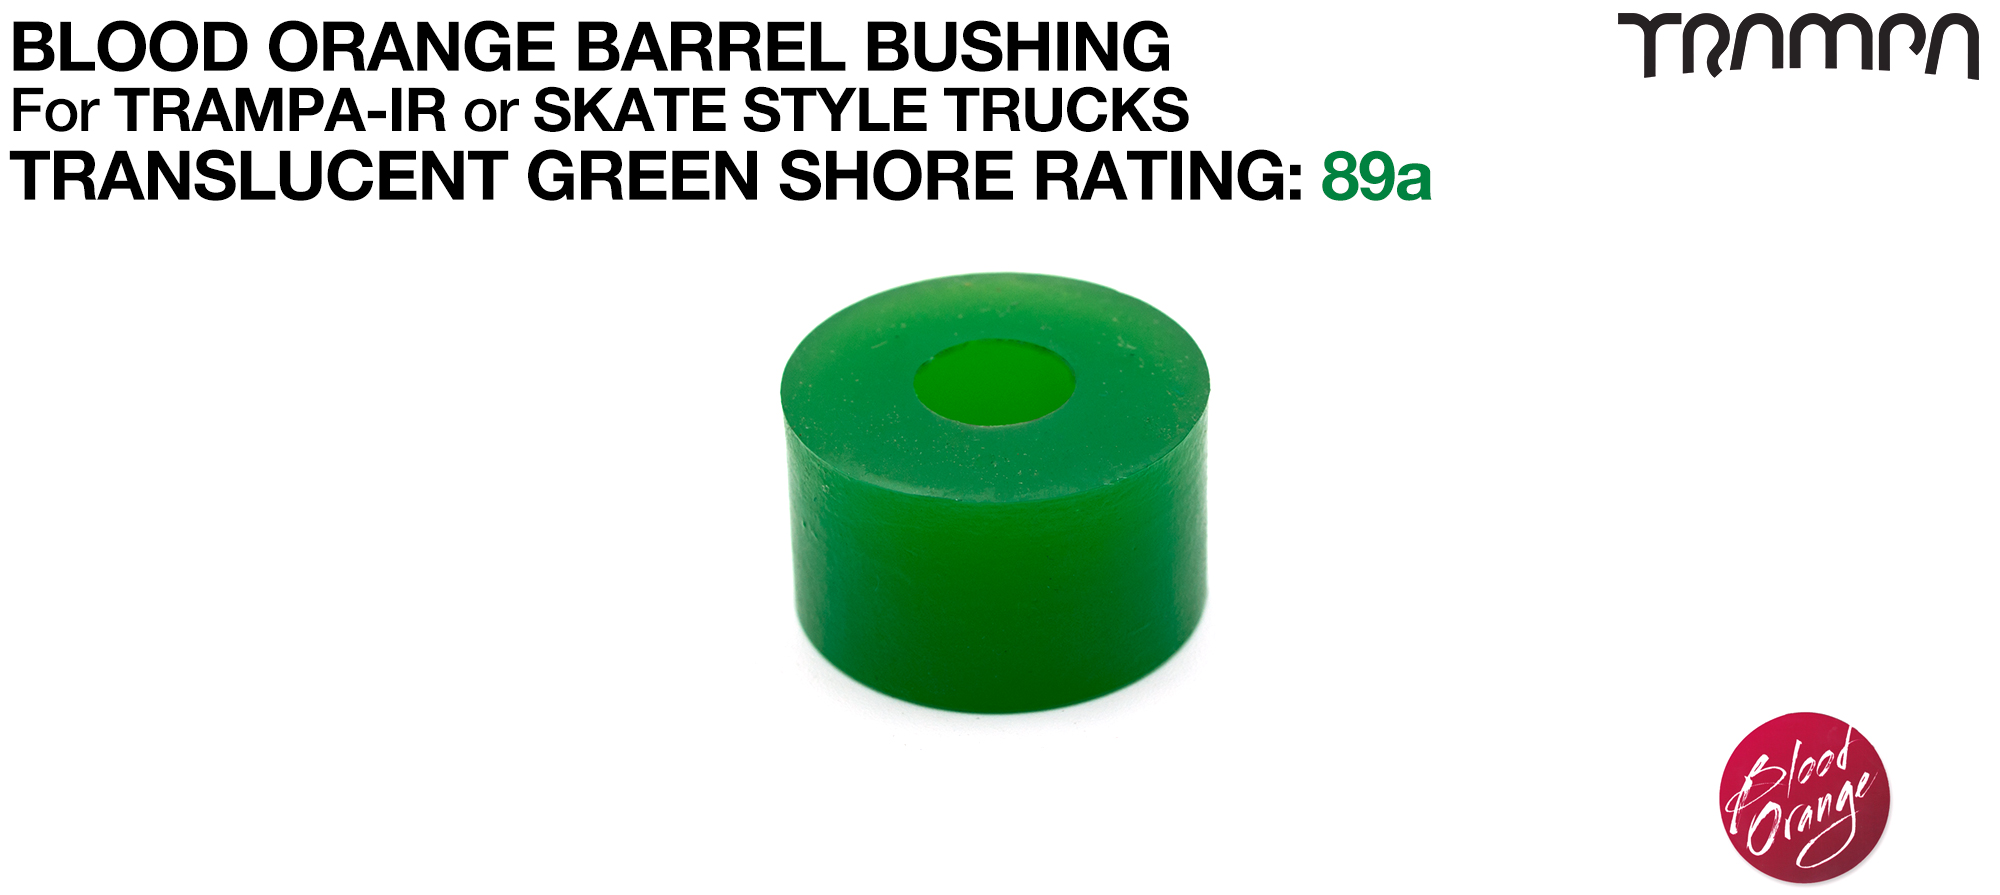 Blood Orange BARREL - GREEN Translucent 89a